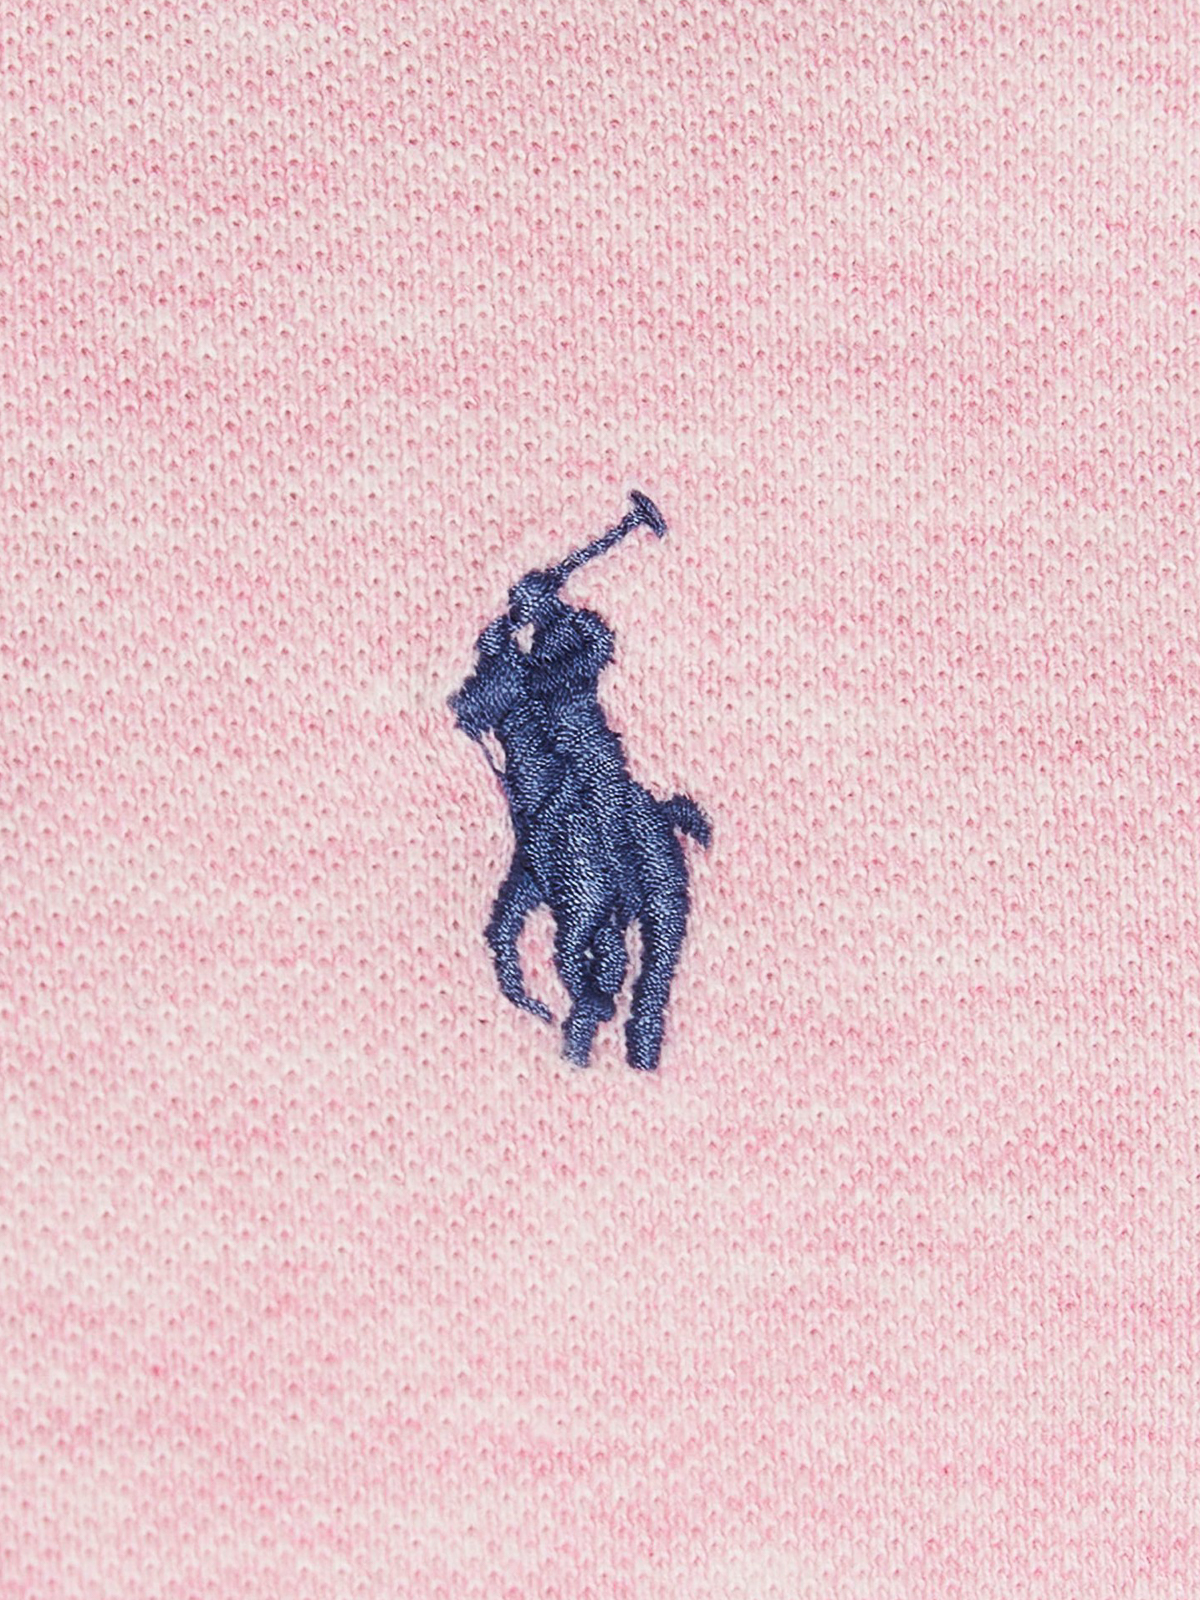 Frasier Logo Embroidered Polo – Paramount Shop